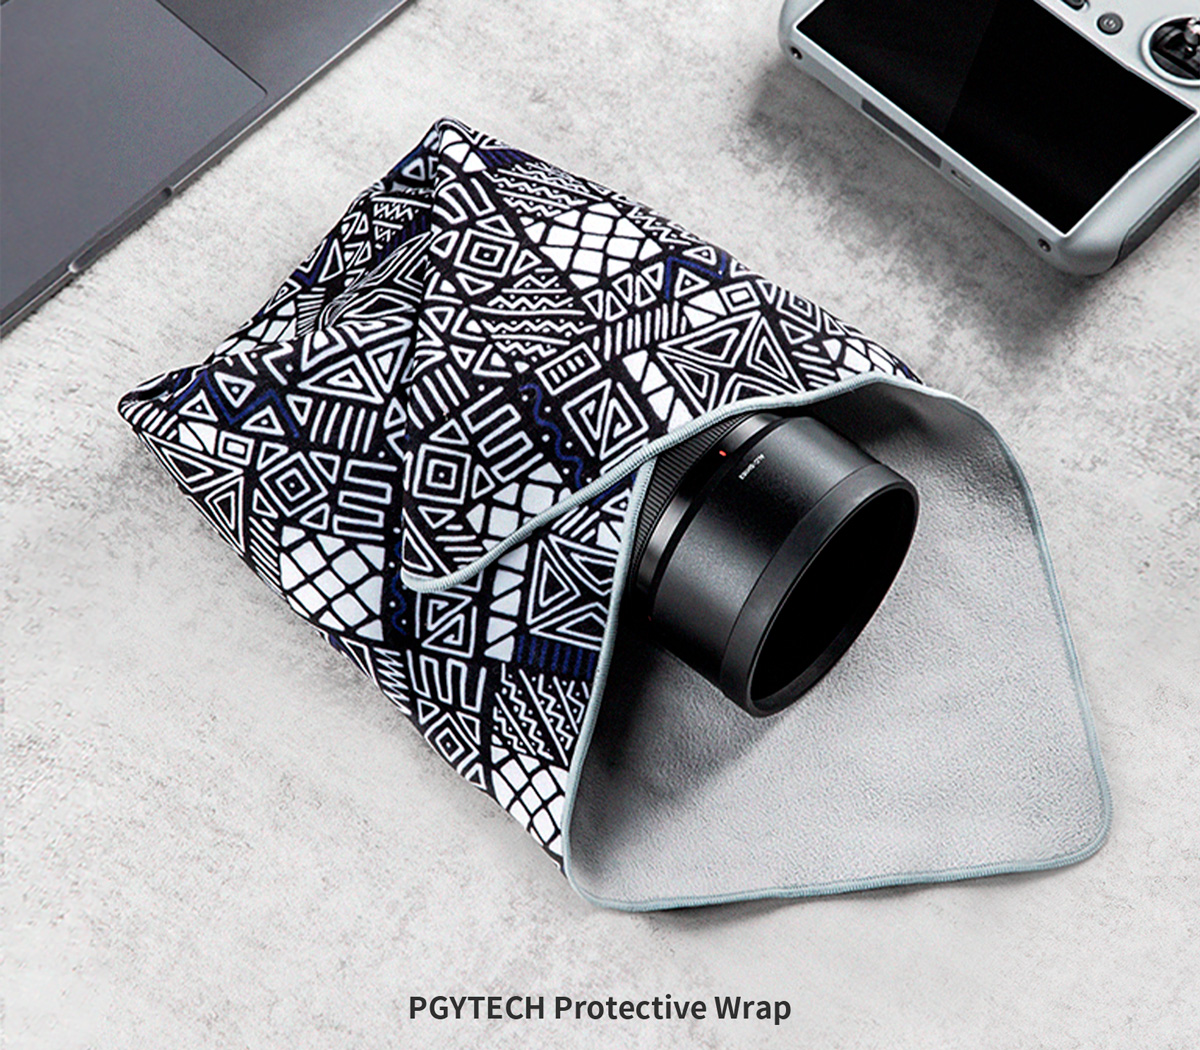 Protective Wrap, размер S, расцветка Geek